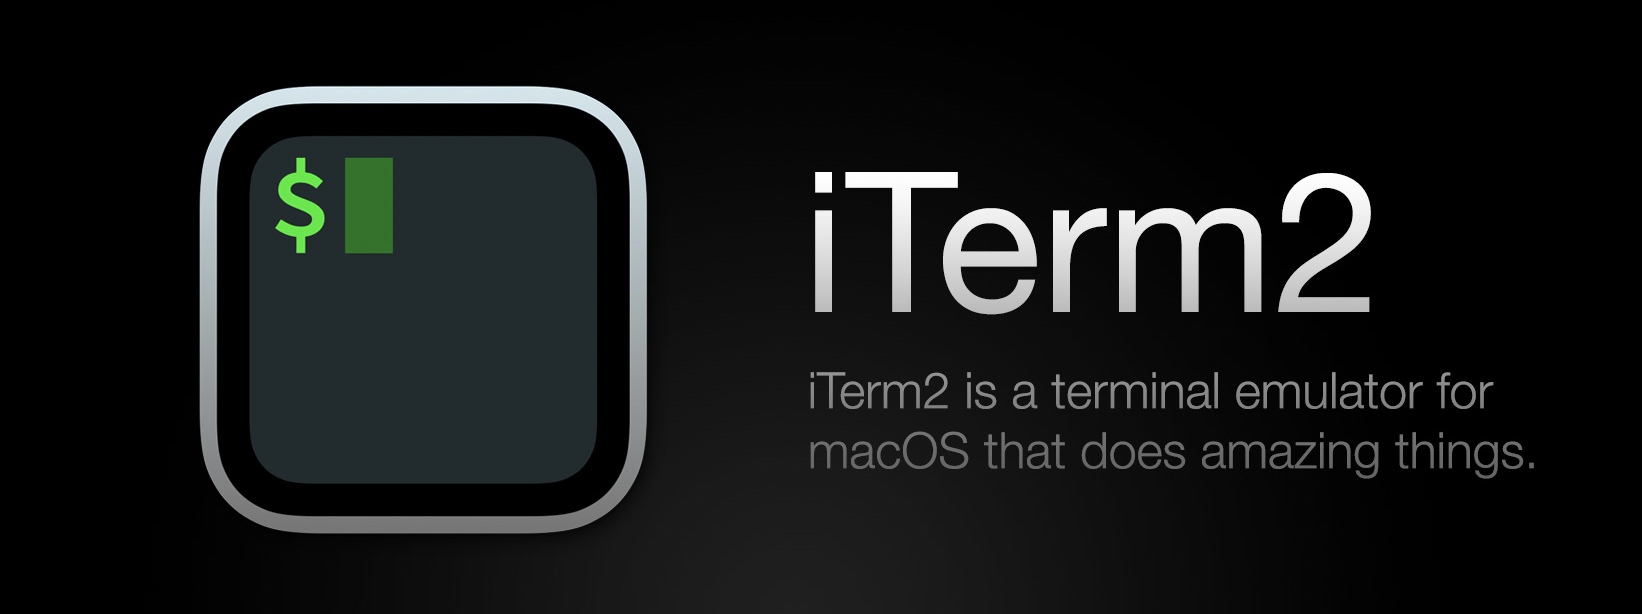 iterm2 m1 mac